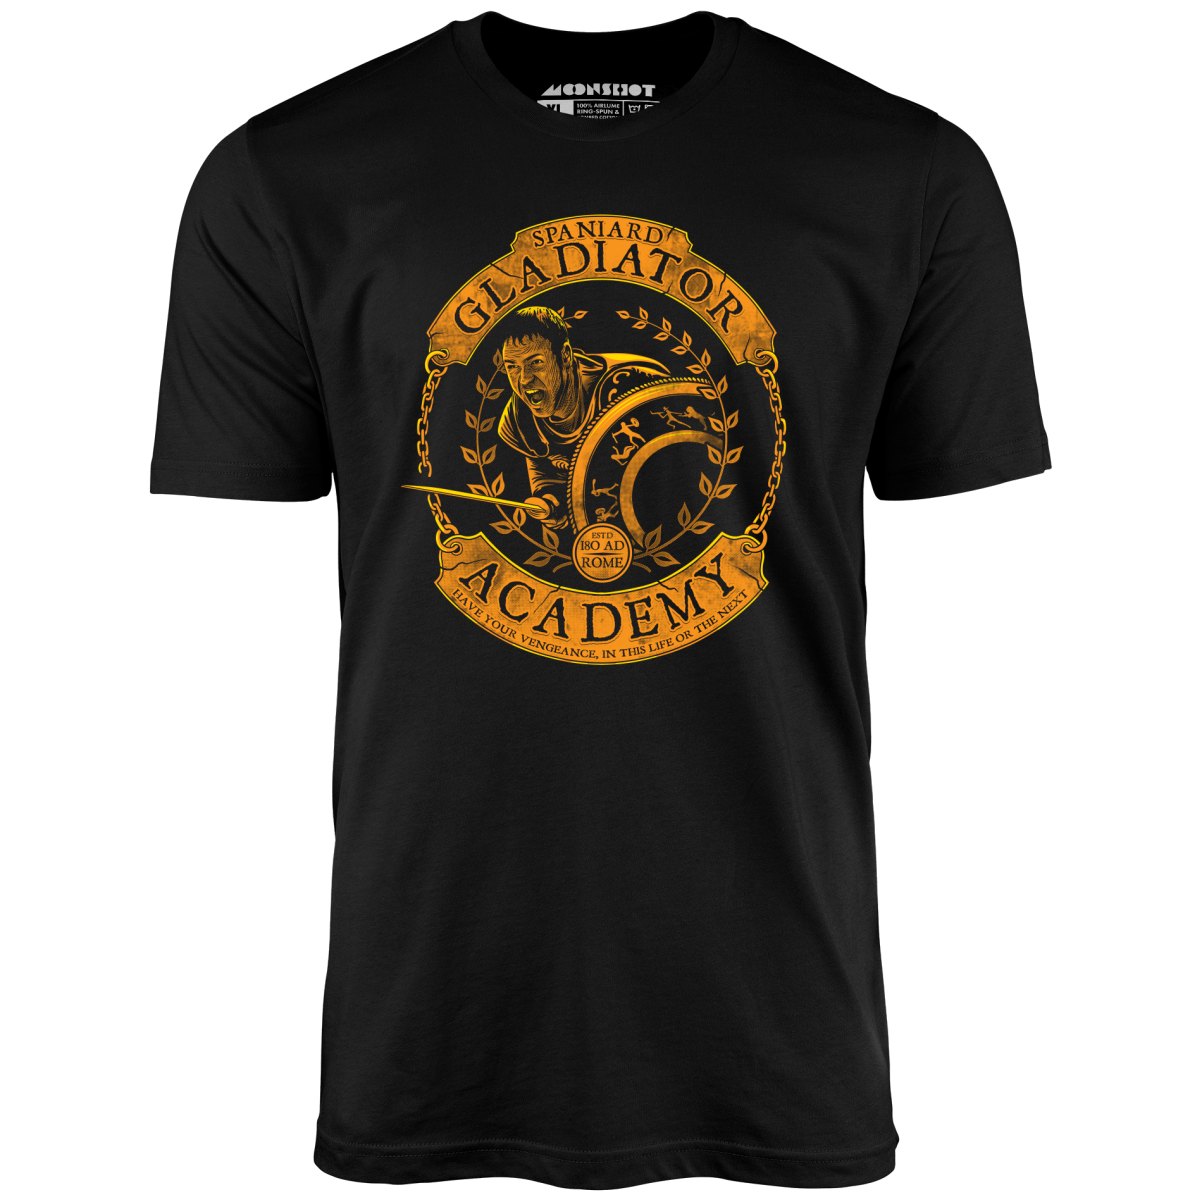 Spaniard Gladiator Academy - Unisex T-Shirt